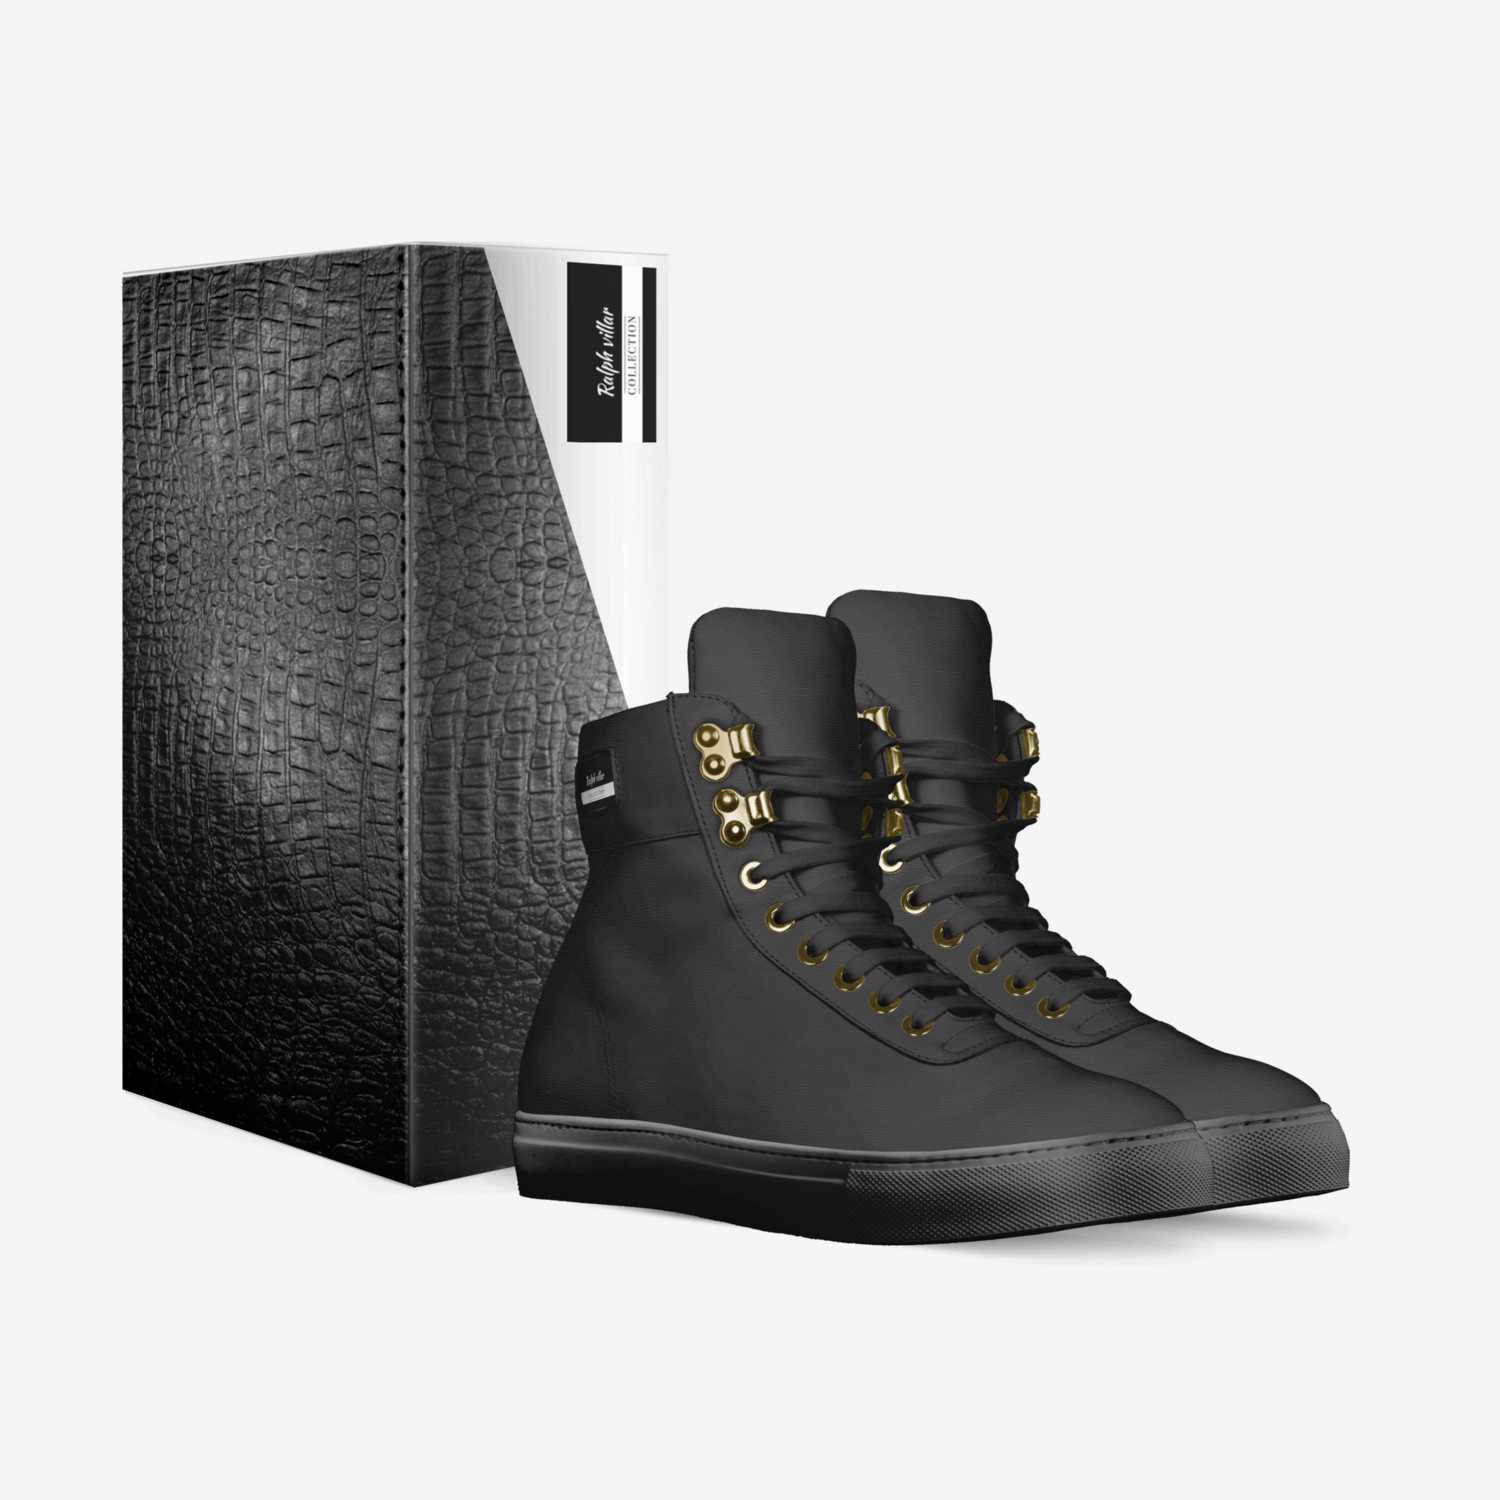 Ralph villar custom made in Italy shoes by Rafael Villar | Box view